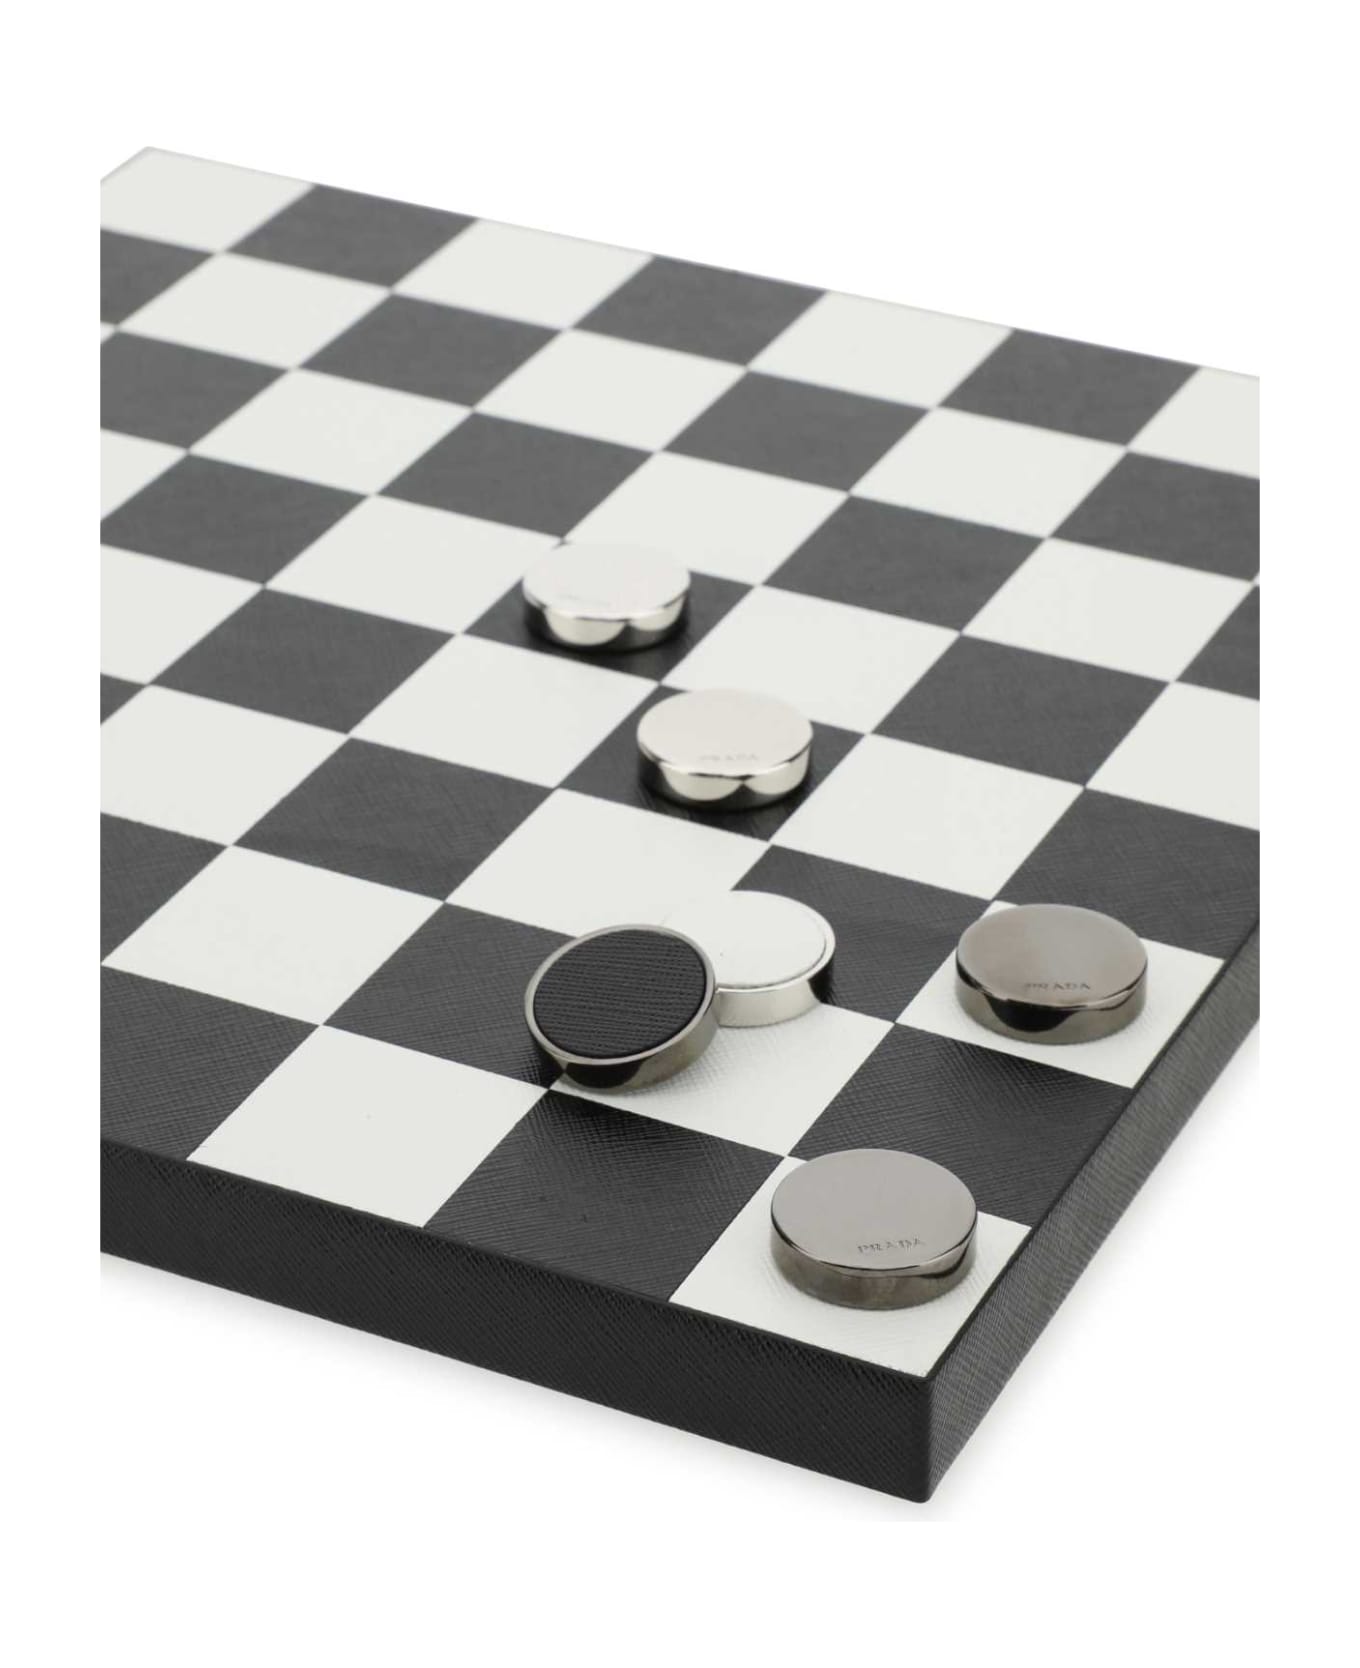 Prada Black Leather Checkers Game Kit - NERO